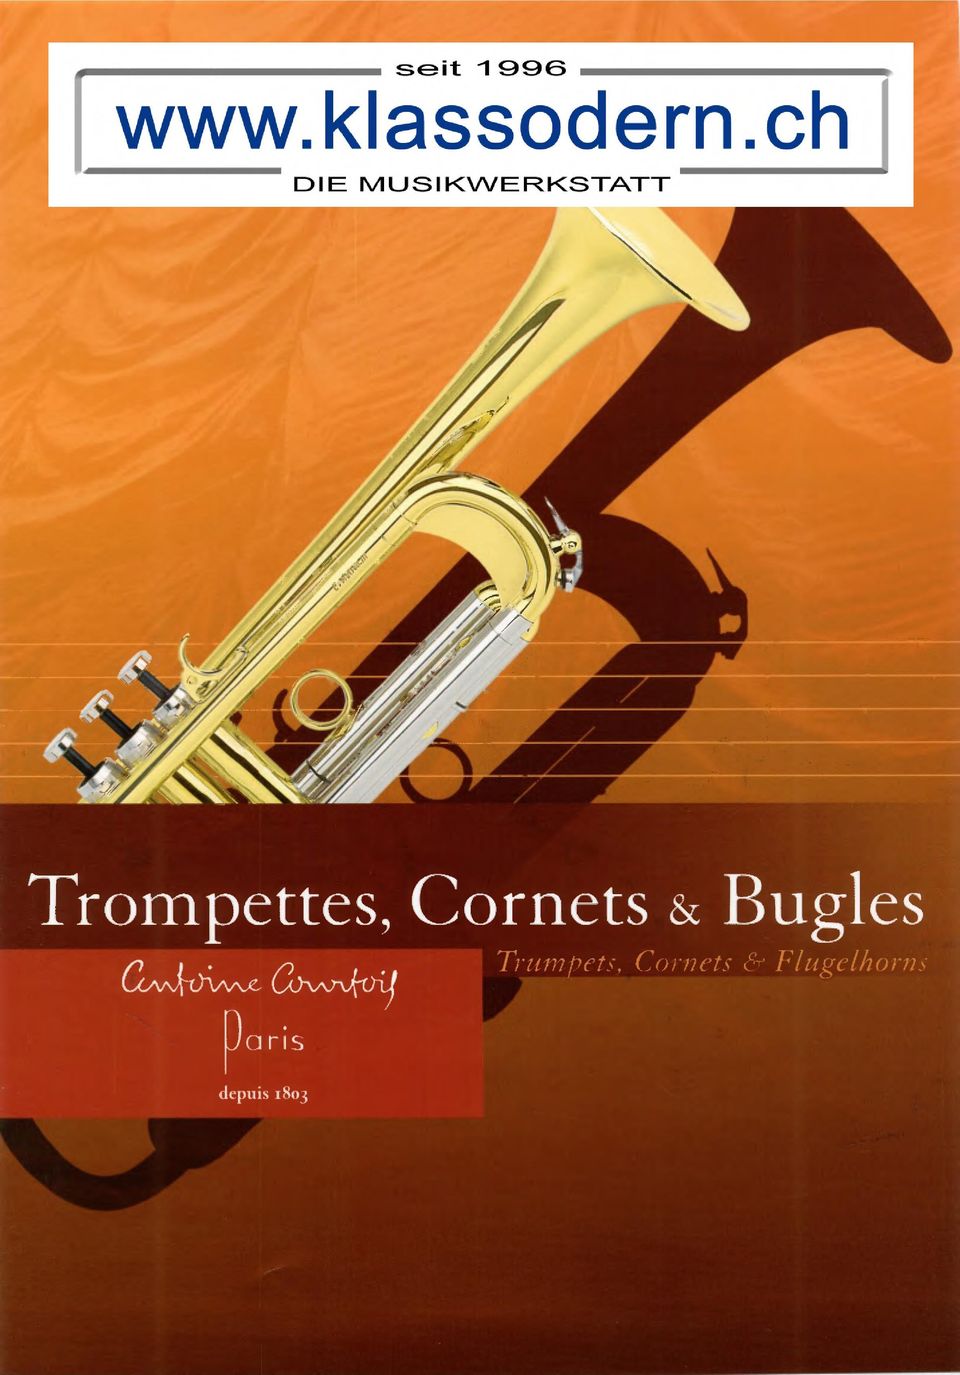 Cornets & Bugles CAAI-oiA",cethiv40ii J